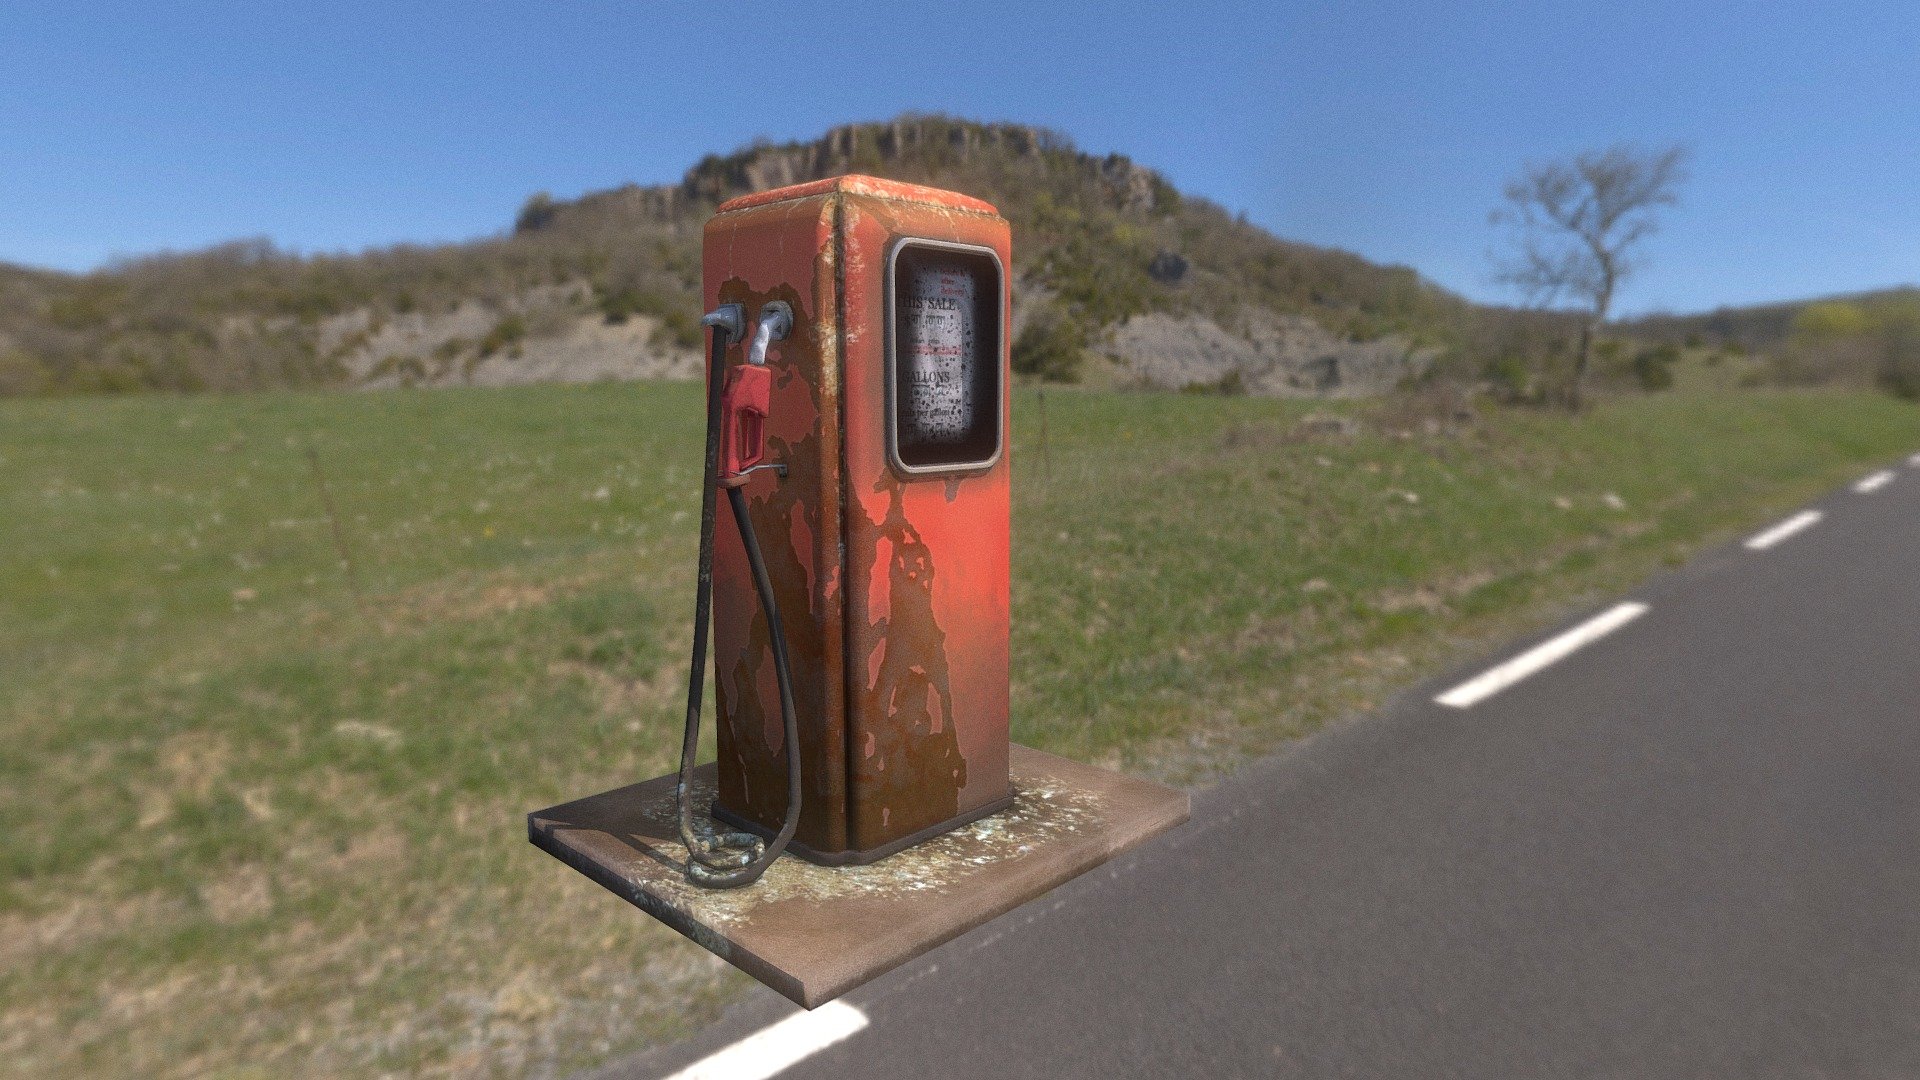 fuel station